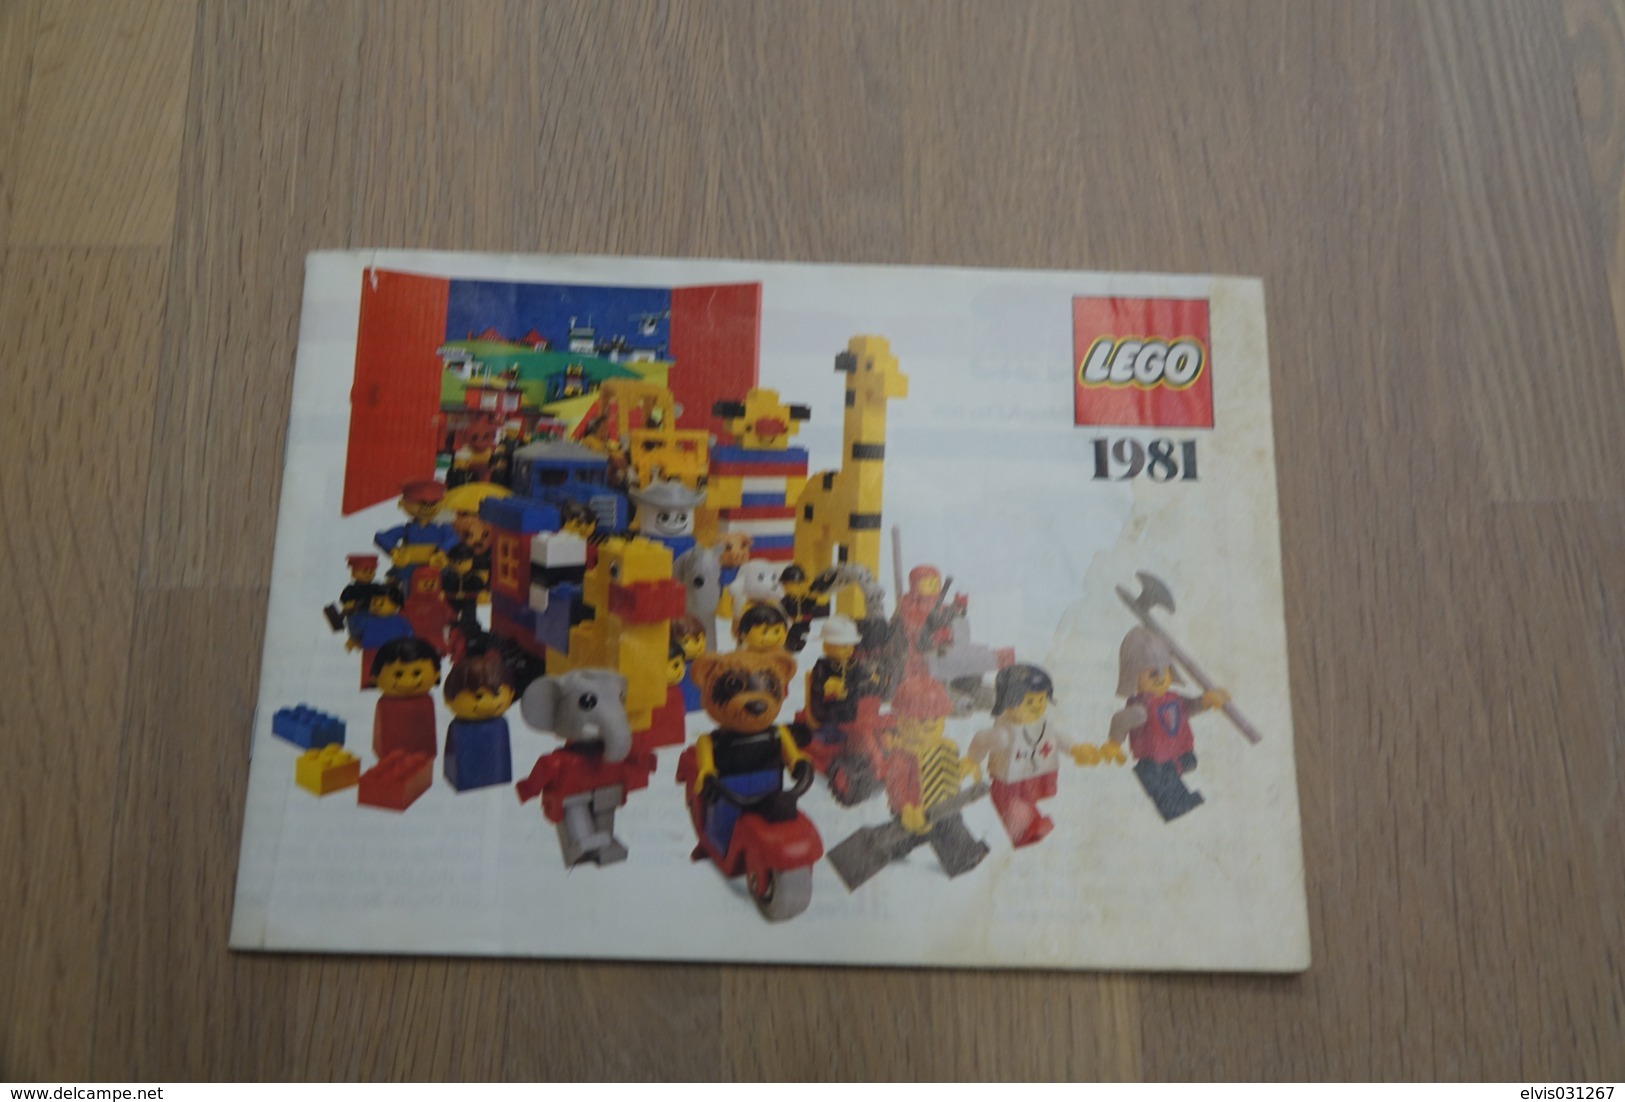 LEGO - CATALOG 1981 - Original Lego 1981 - Vintage - EN - Big - Catálogos